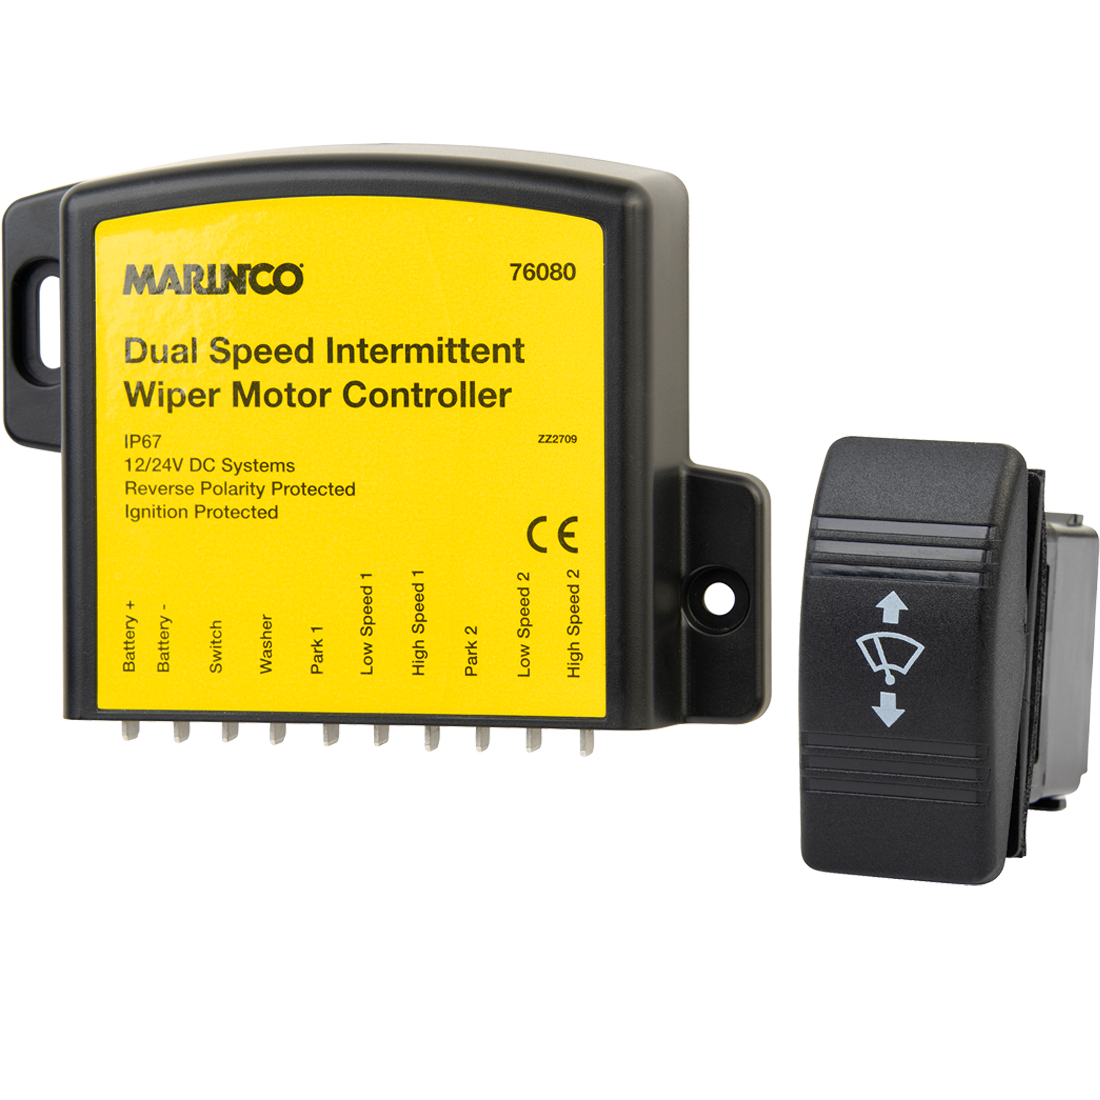 Marinco Dual Speed Intermittent Wiper Motor Controller [76080]